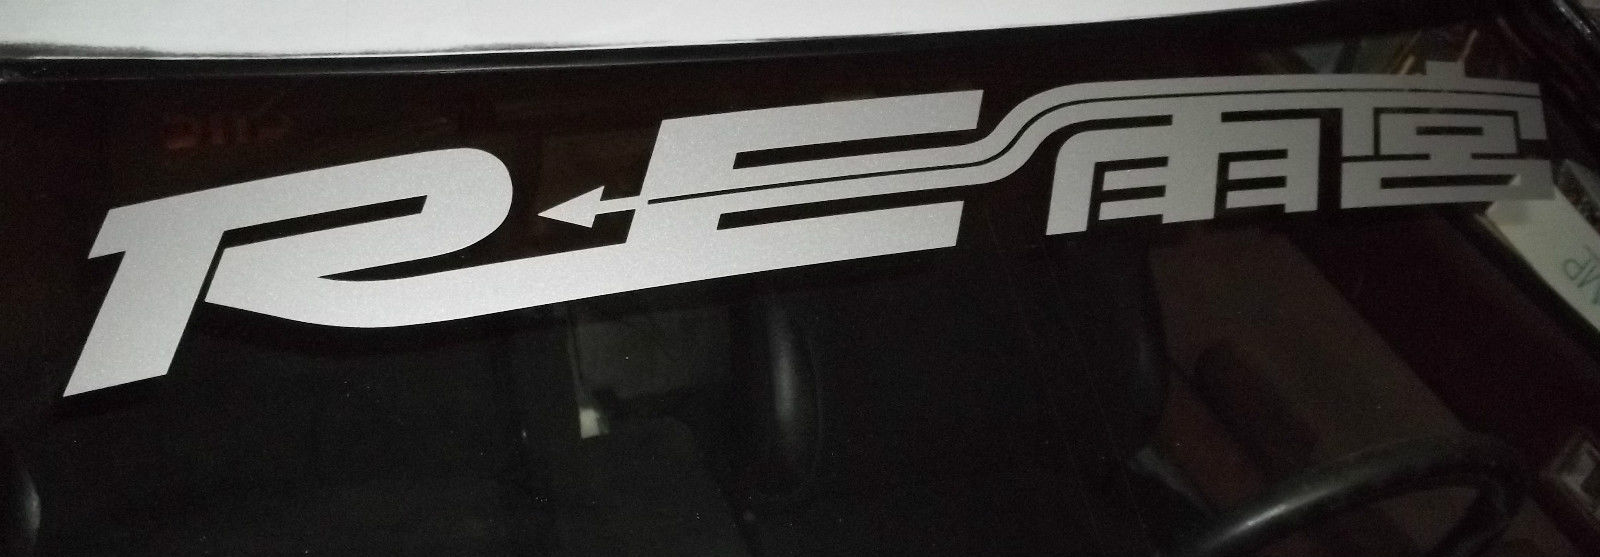 RE Amemiya Logo Jdm Mazda Rx7 Rx8 Rotory Racing Motorsport Banner Strip Car Windschutzscheibe Vinyl Aufkleber Aufkleber Aufkleber